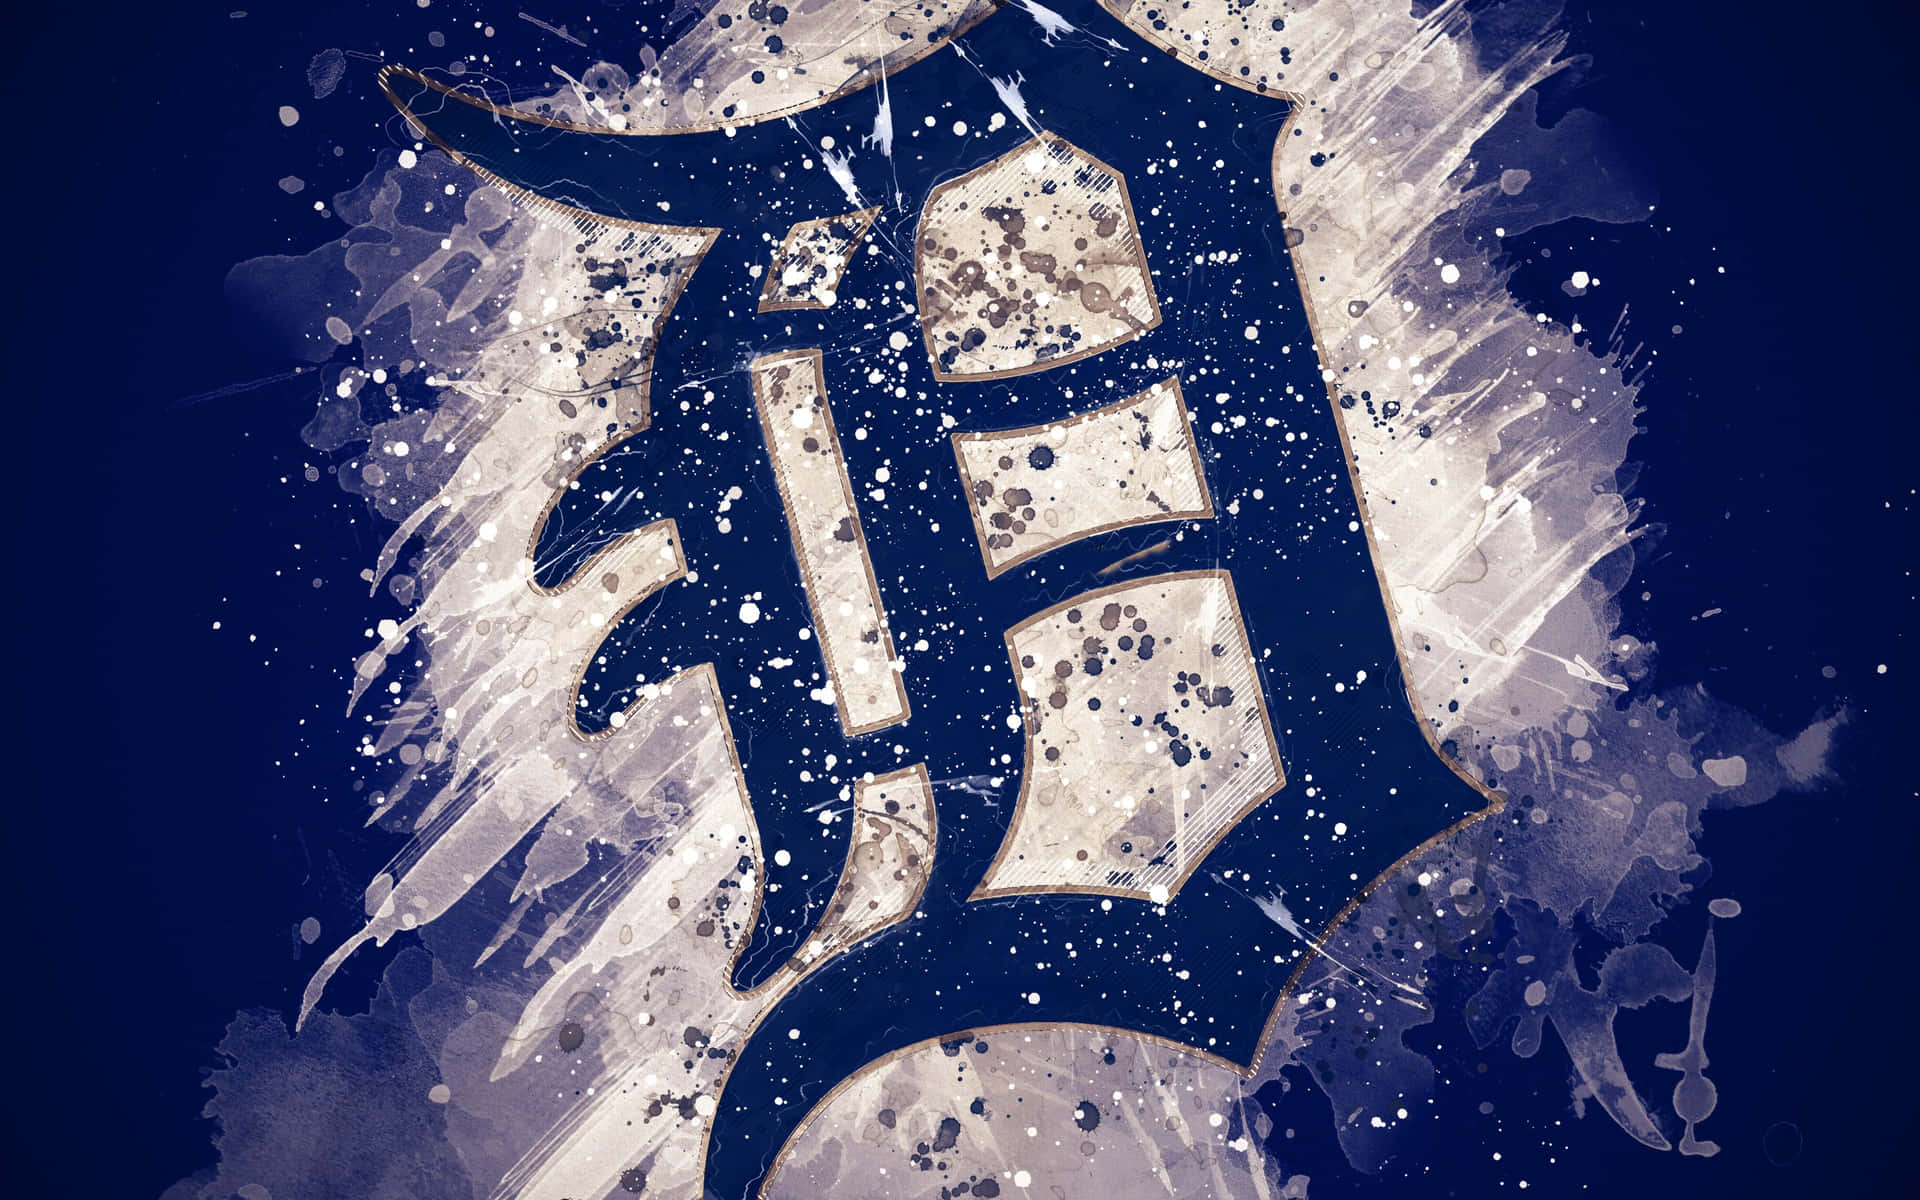 Download Detroit Tigers Logo With Splash Of Paint Wallpaper